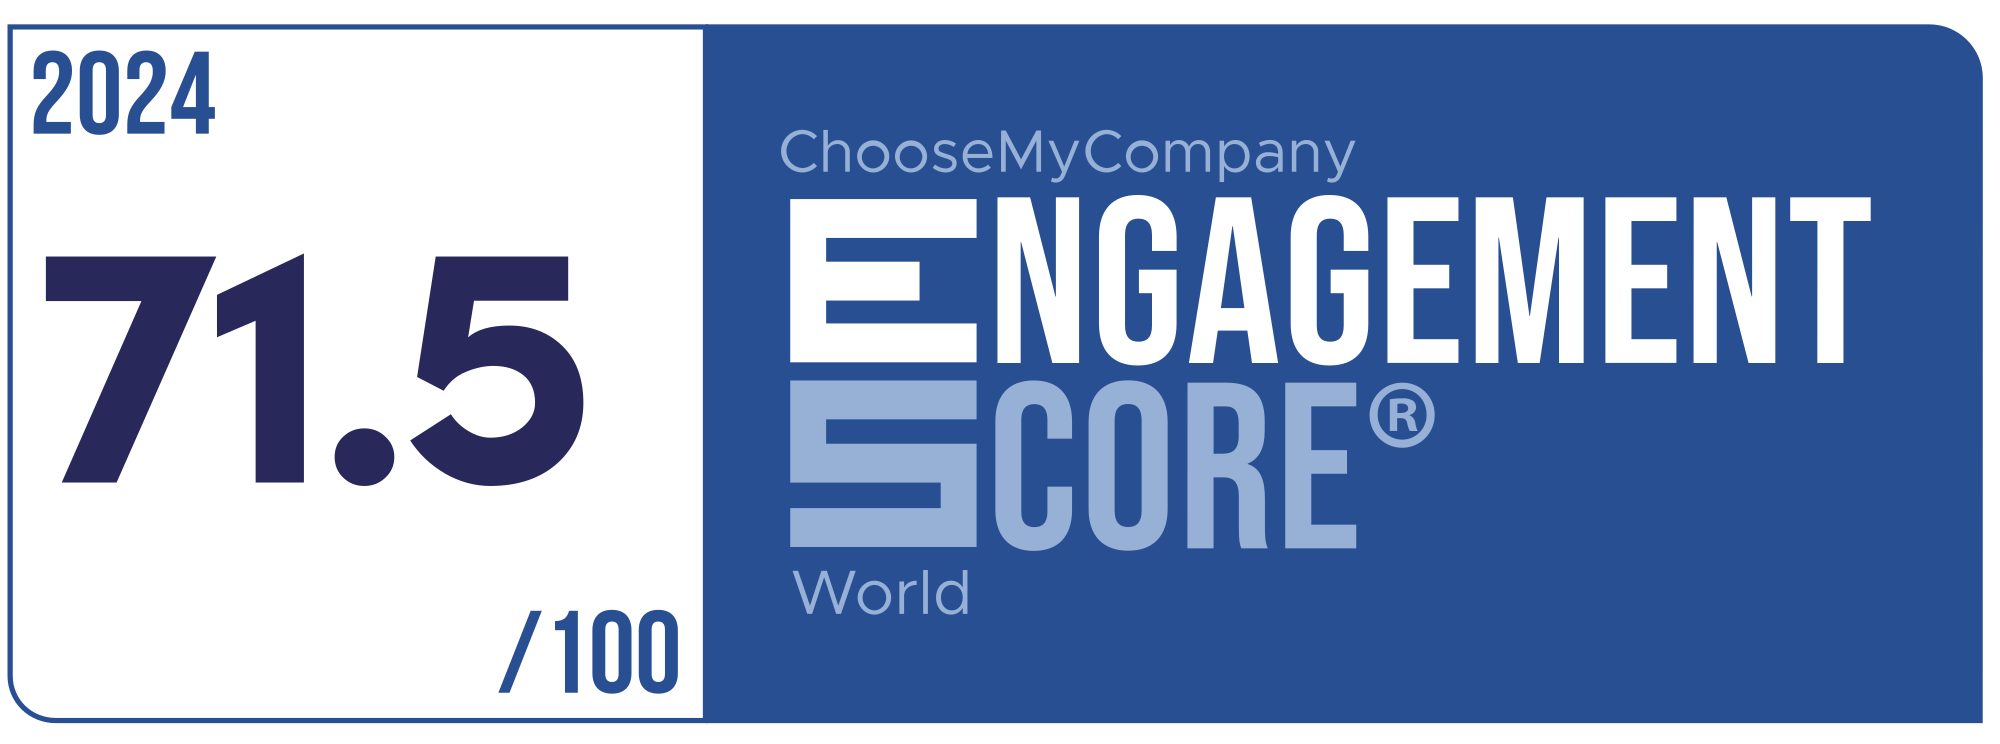 Label Engagement Score 2024 World